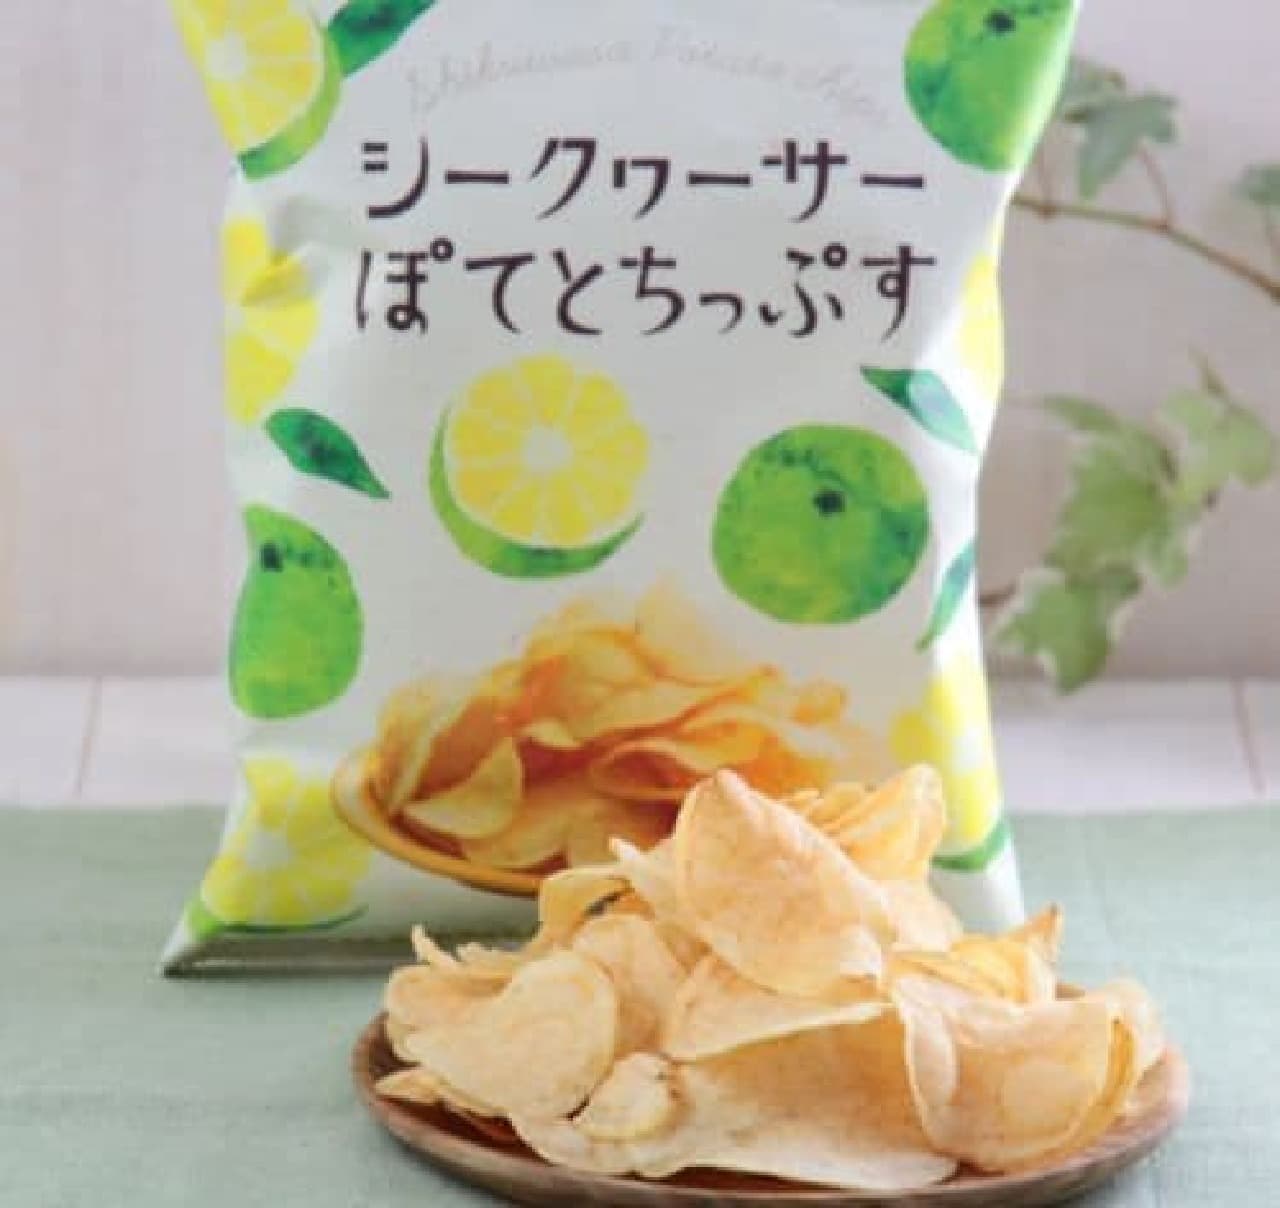 "Original Shikuwasa Potato Chips" is a potato chip arranged to match the taste of "Shikuwasa" produced in Okinawa Prefecture.